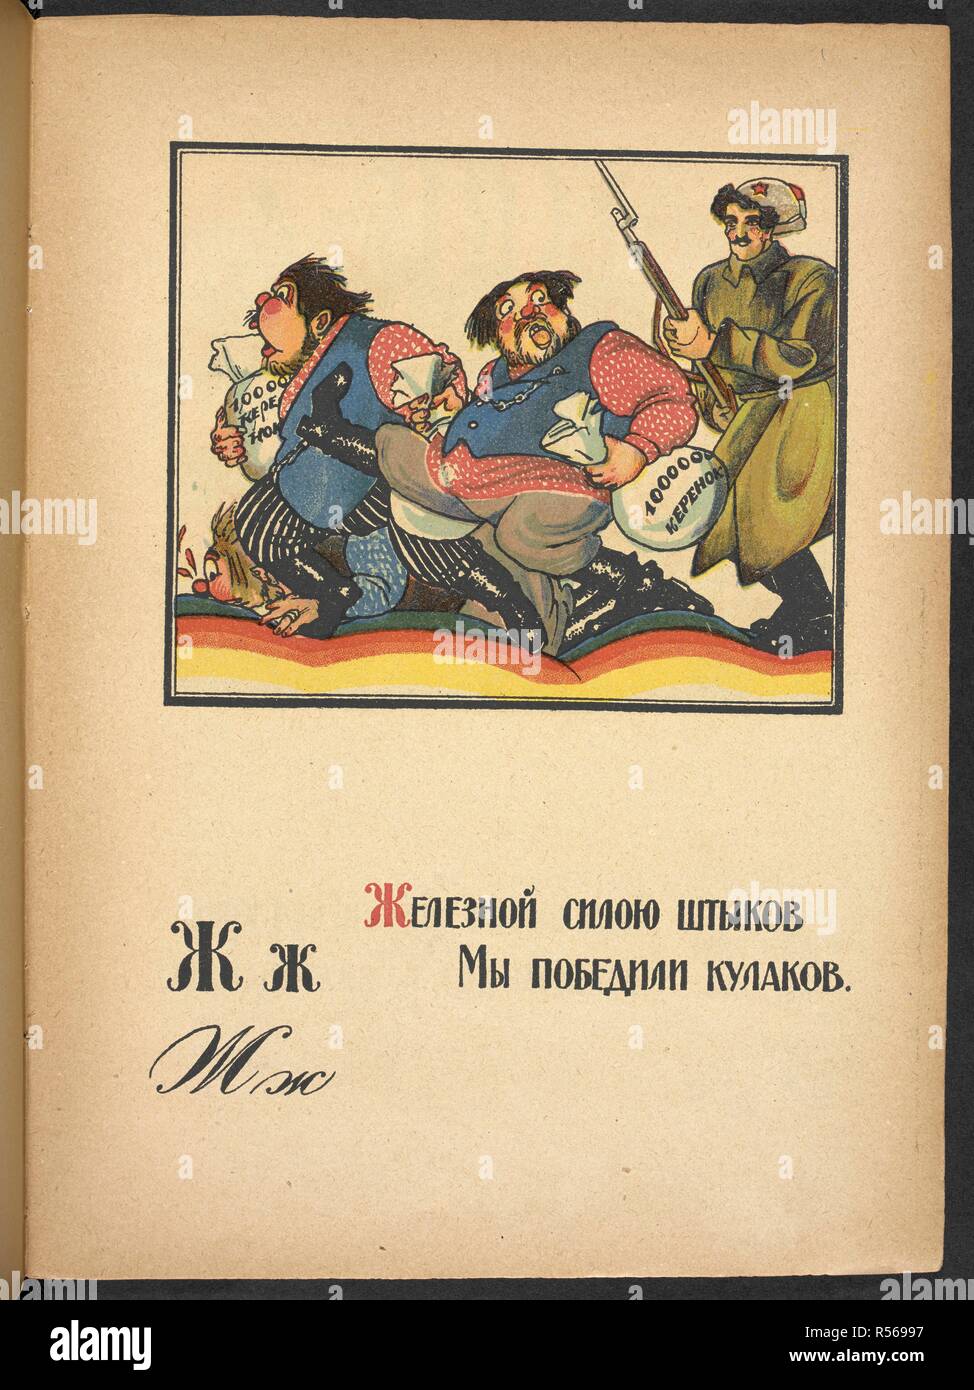 Ð–Ð¶  Ð–ÐµÐ»ÐµÐ·Ð½Ð¾Ð¹ ÑÐ¸Ð»Ð¾ÑŽ ÑˆÑ‚Ñ‹ÐºÐ¾Ð²  ÐœÑ‹ Ð¿Ð¾Ð±ÐµÐ´Ð¸Ð»Ð¸ ÐºÑƒÐ»Ð°ÐºÐ¾Ð²  By the iron will of the bayonet  We have defeated the kulaks.  Depicts a Red soldier chasing three kulaks with a bayonet. The kulaks are clutching sacks full of â€˜kerenkaâ€™, the name given to the banknotes issued by the Russian Provisional Government under Alexander Kerensky.    . ÐÐ·Ð±ÑƒÐºÐ° ÐºÑ€Ð°ÑÐ½Ð¾Ð°Ñ€Ð¼ÐµÐ¹Ñ†Ð° / ÐÐ°Ð¿Ð¸ÑÐ°Ð» Ð¸ Ð½Ð°Ñ€Ð¸ÑÐ¾Ð²Ð°Ð». [Moskva] : [Otdel voennoiÌ† lit-ry pri Revoliï¸ uï¸¡tï¸ sï¸¡ionnom sovete Respubliki]: [Gos. izd-vo], [1921] The department of war literature under th Stock Photo